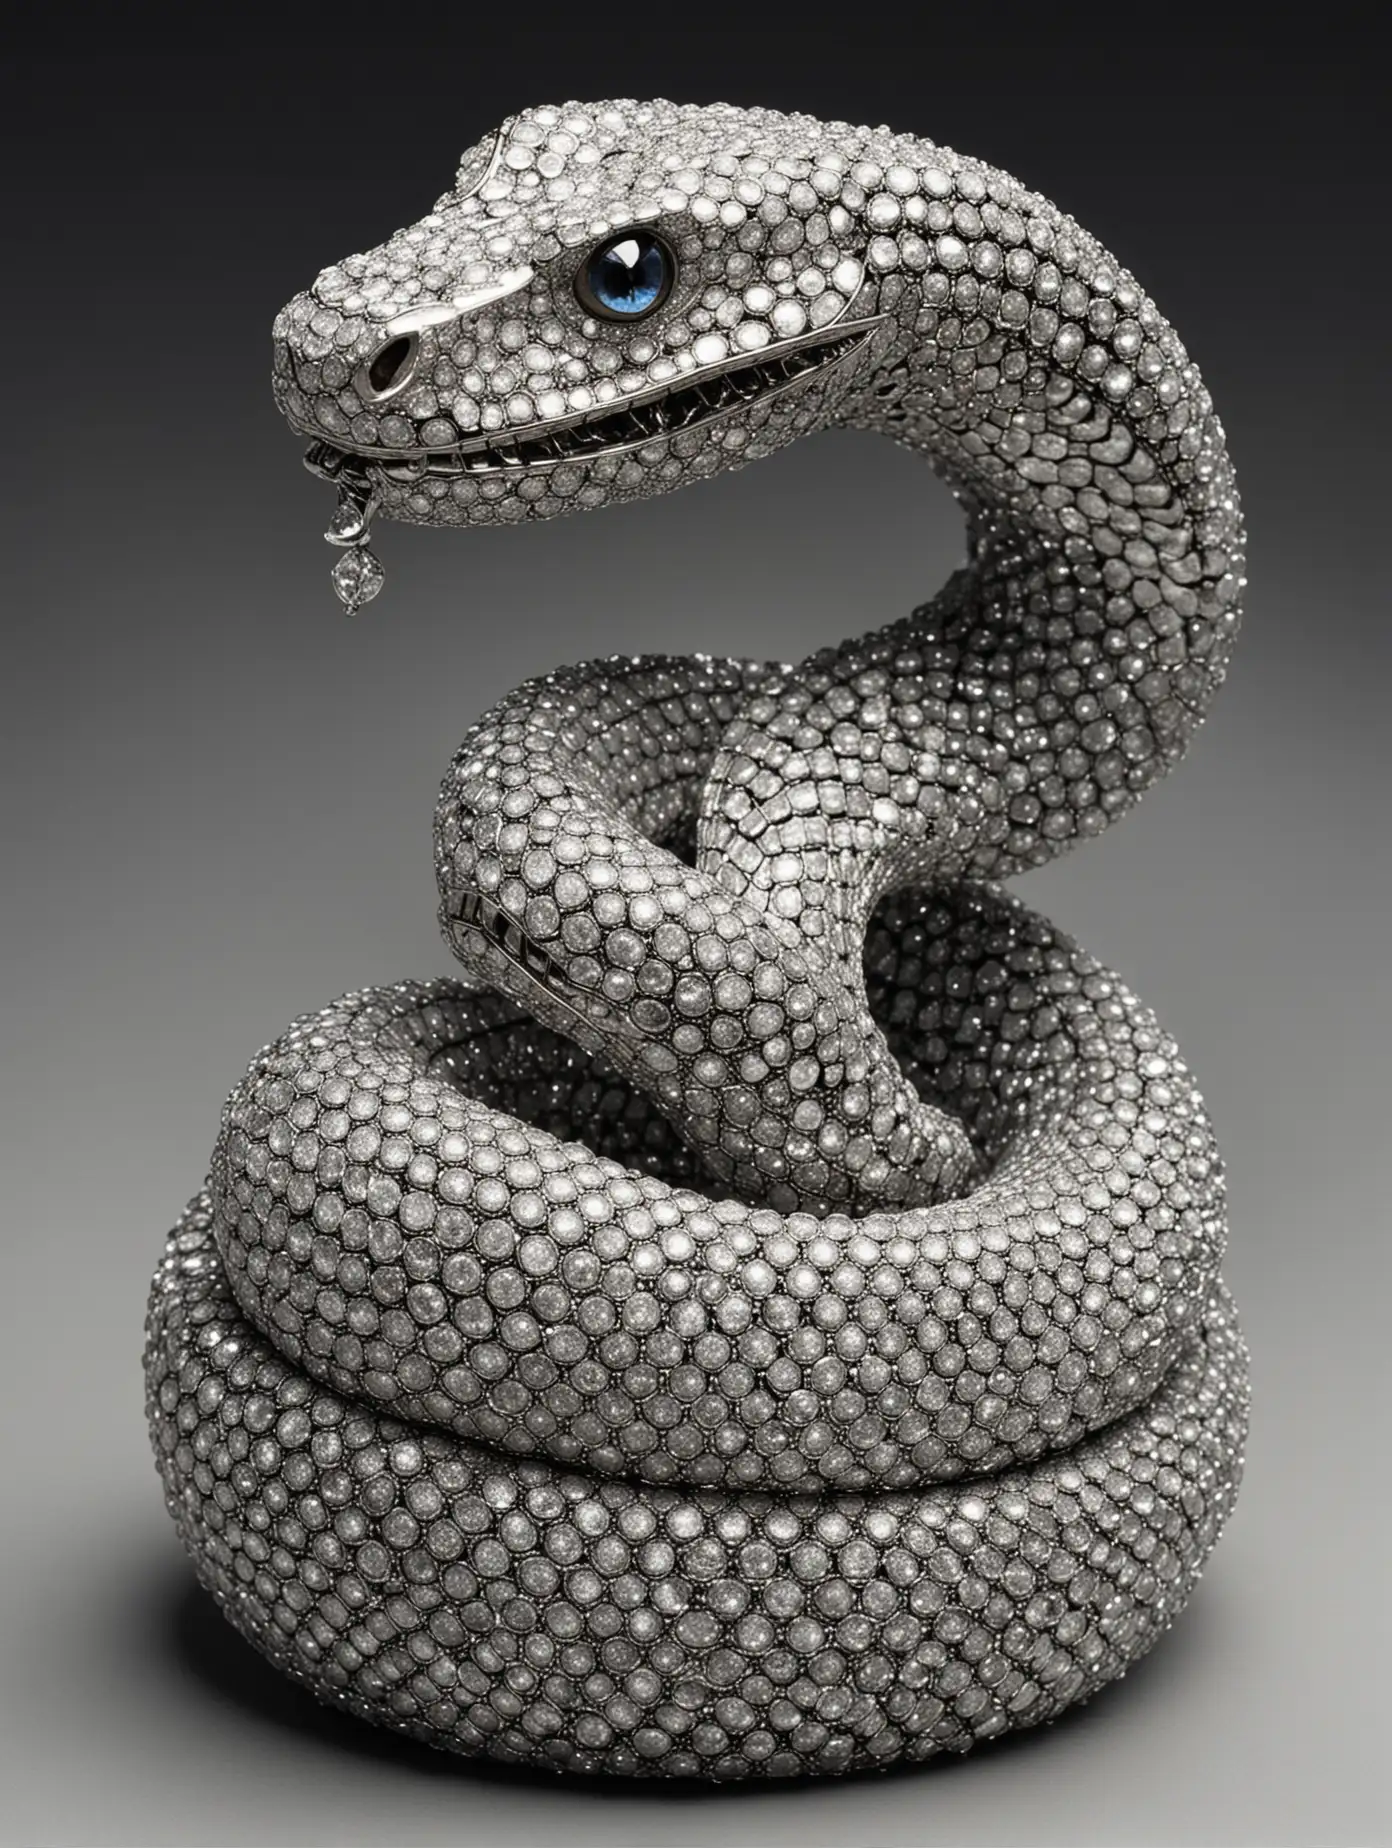 Luxurious DiamondEncrusted Snake Sculpture